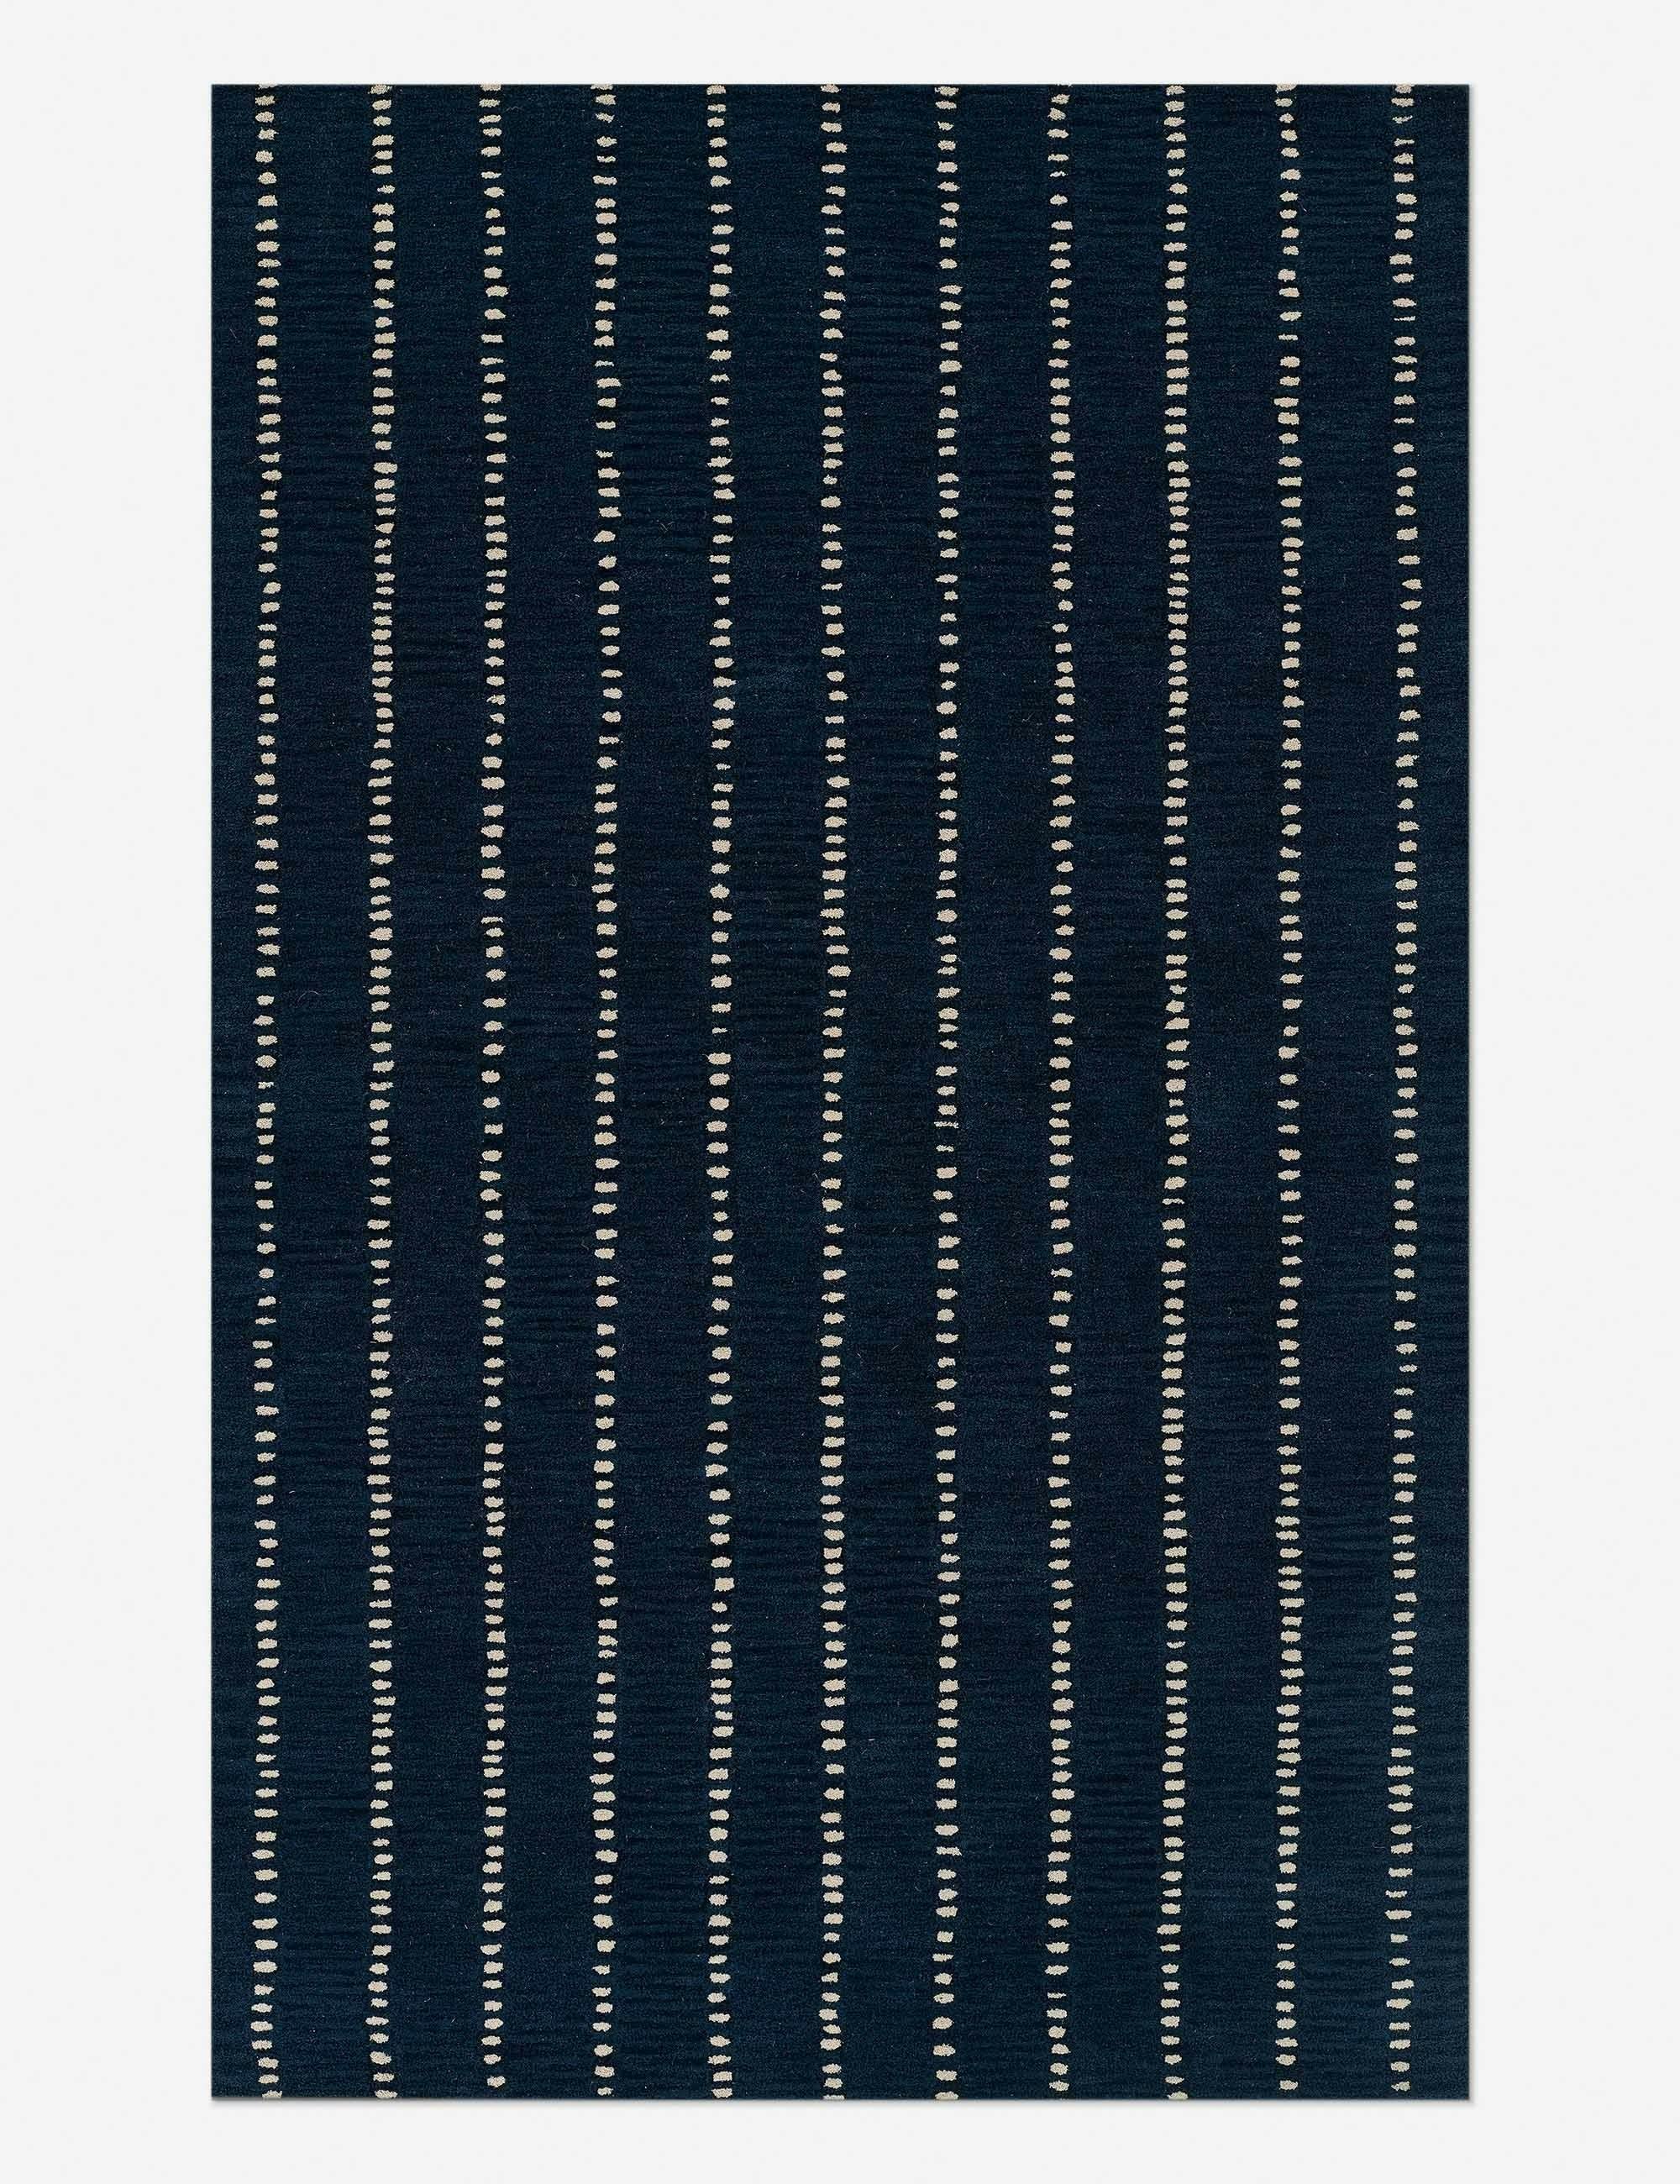 Simba Hand-Tufted Navy Wool Rectangular Rug - 3'6" x 5'6"